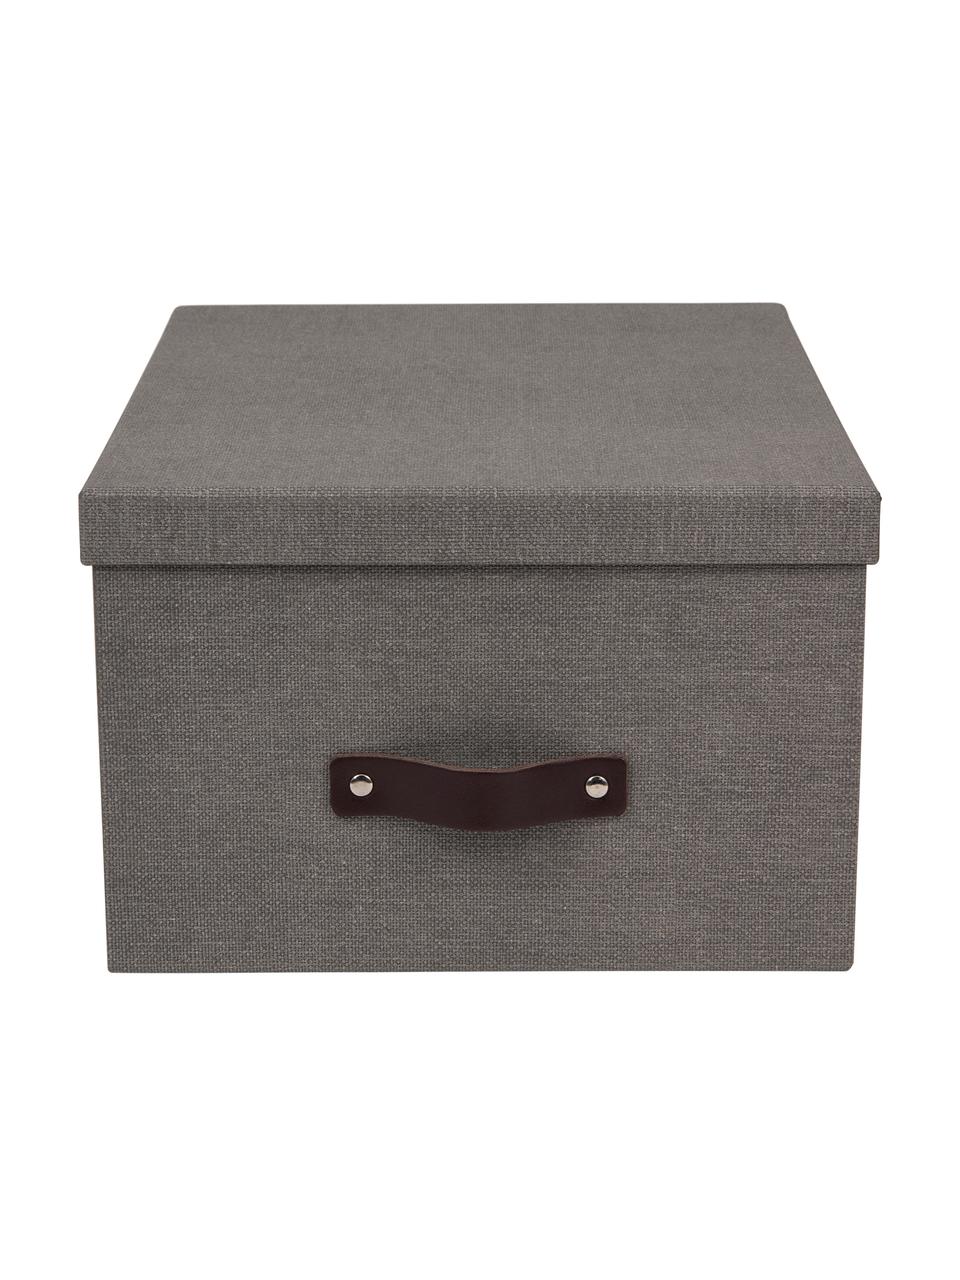 Aufbewahrungsbox Gustav II, Box: Fester, laminierter Karto, Griff: Leder, Grau, B 30 x H 15 cm